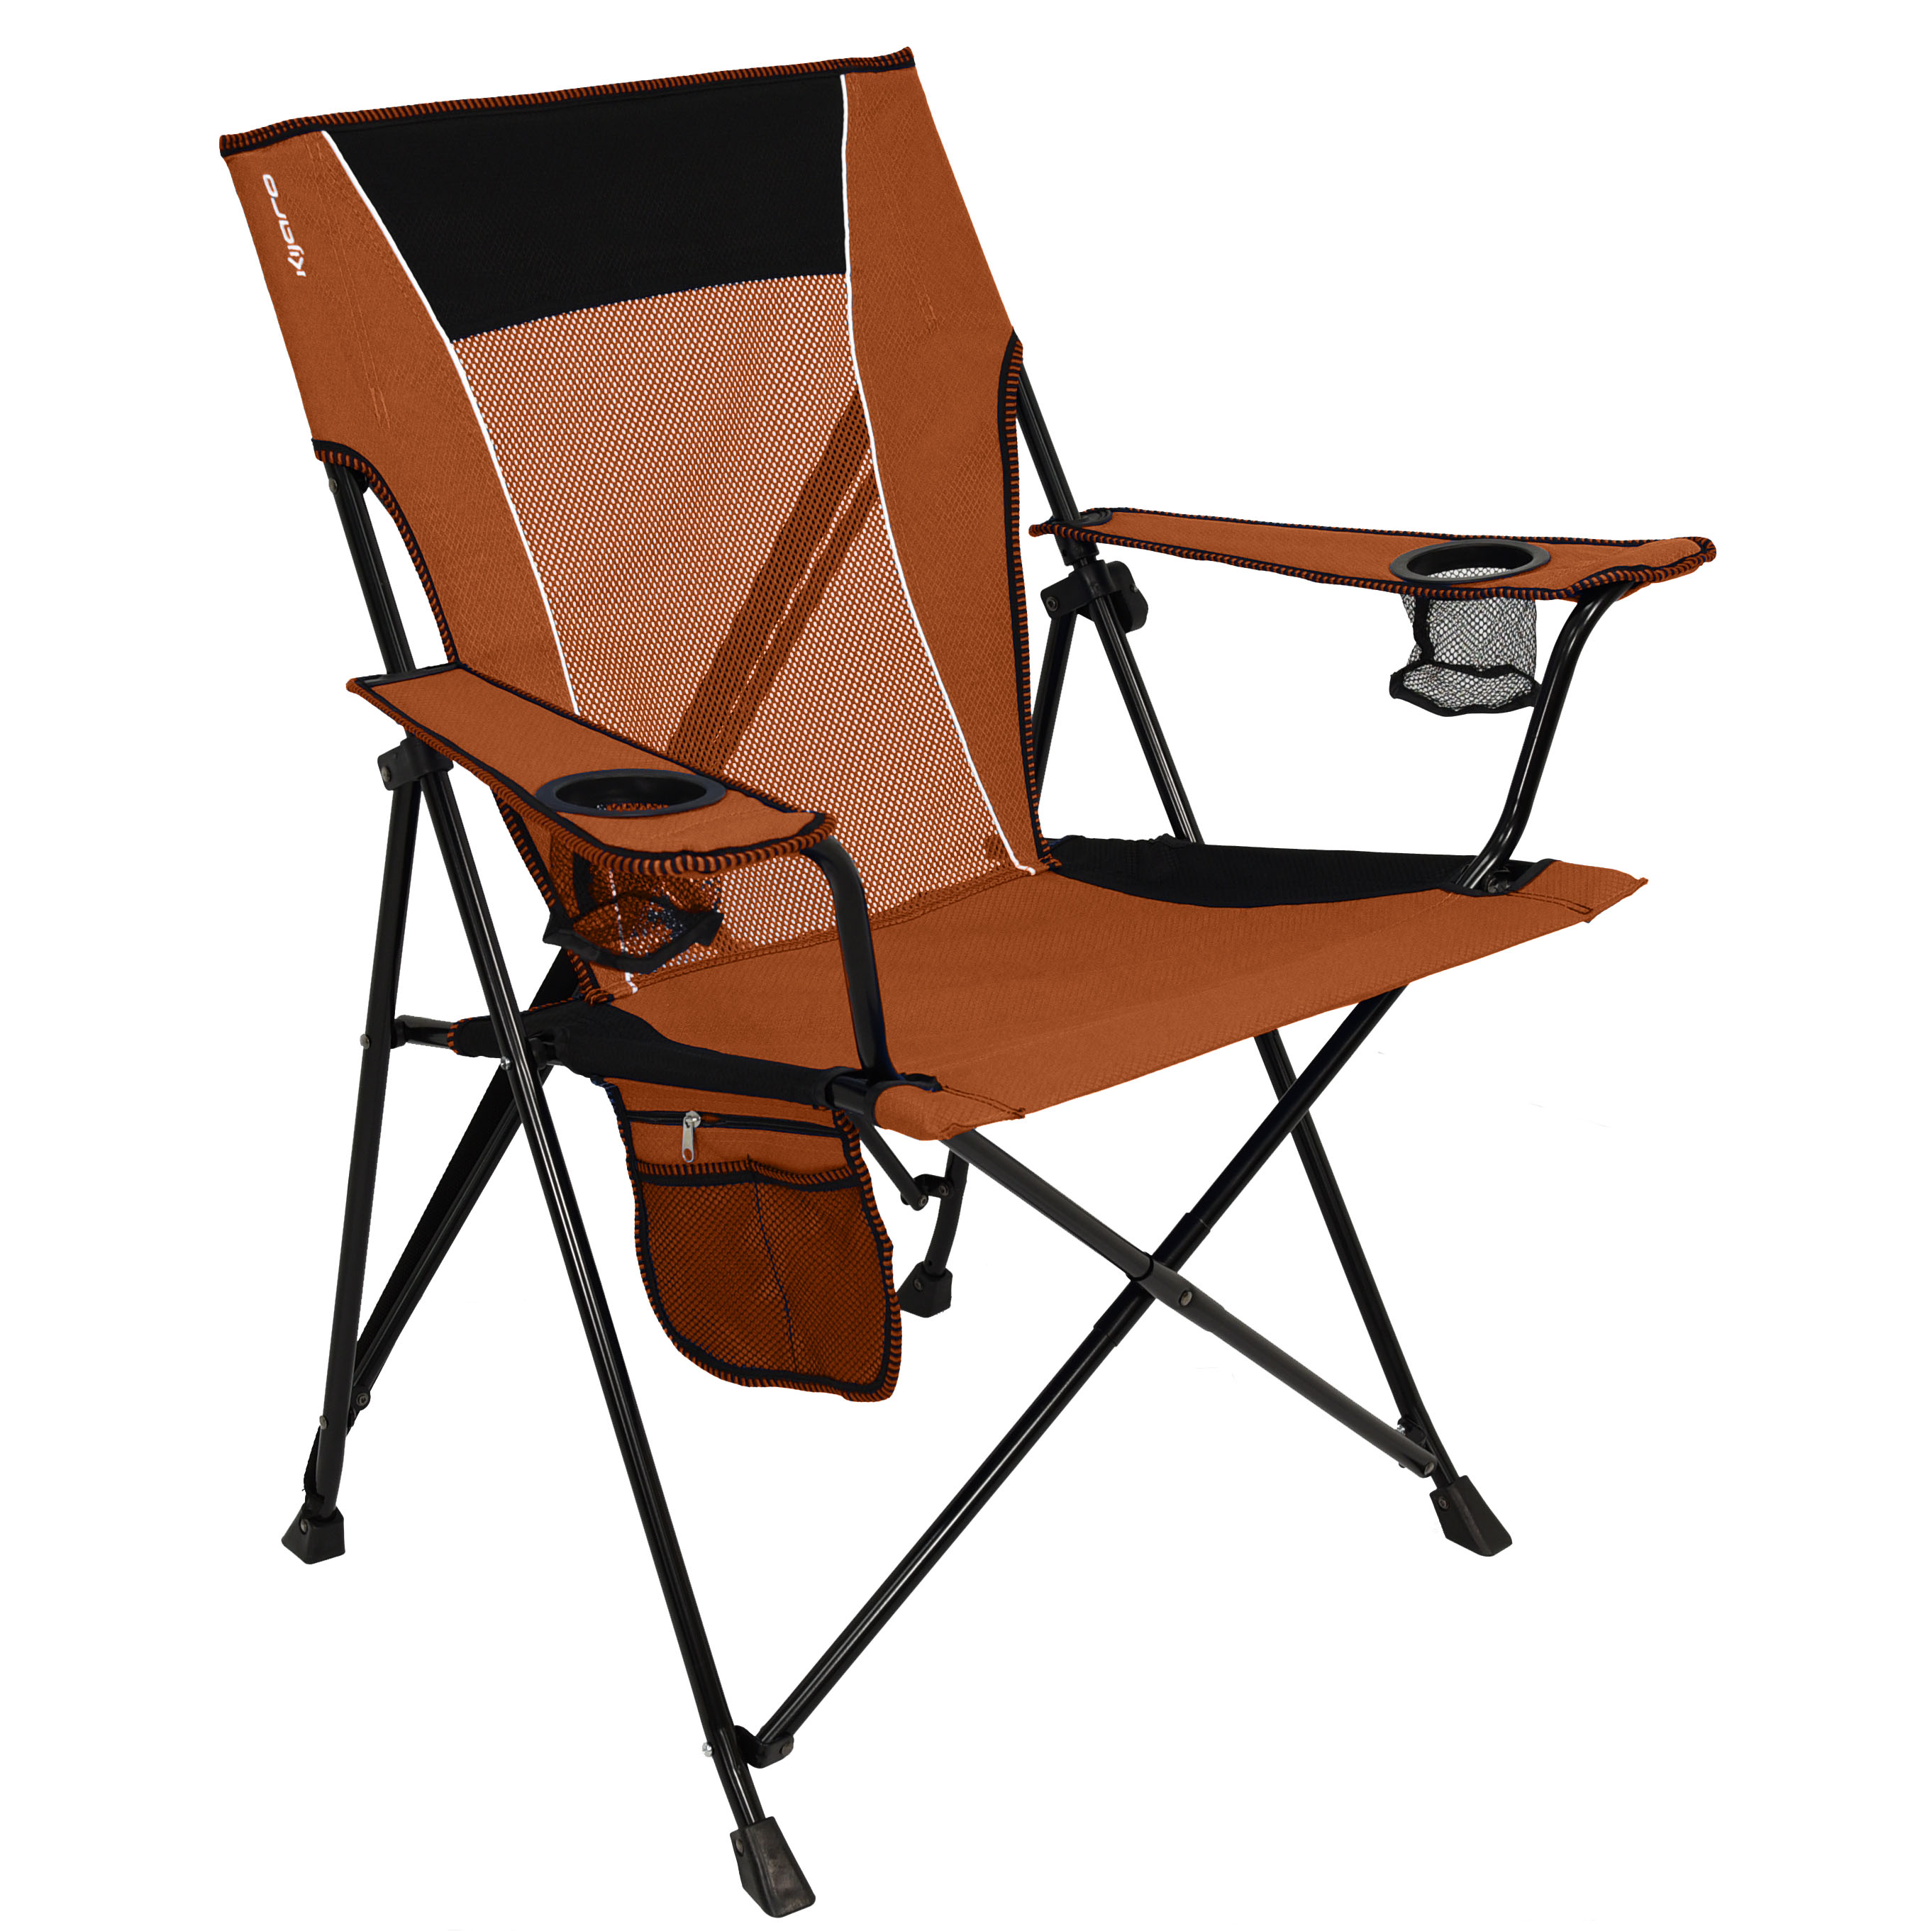 Kijaro Dual Lock Chair - image 3 of 8